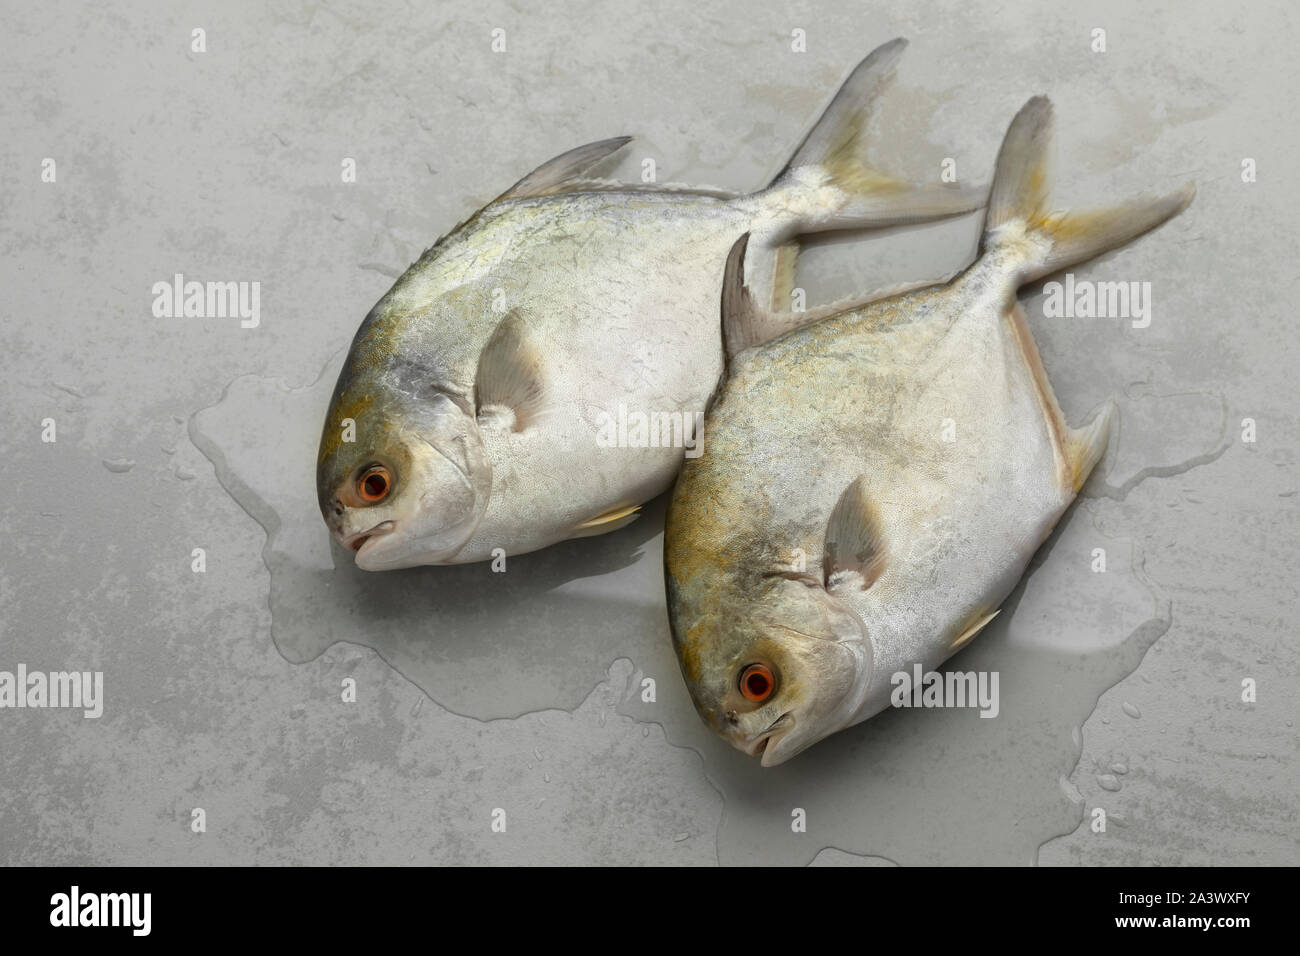 Coppia di crudo fresco golden pomfret pesci o i pesci castagna pesce Foto Stock